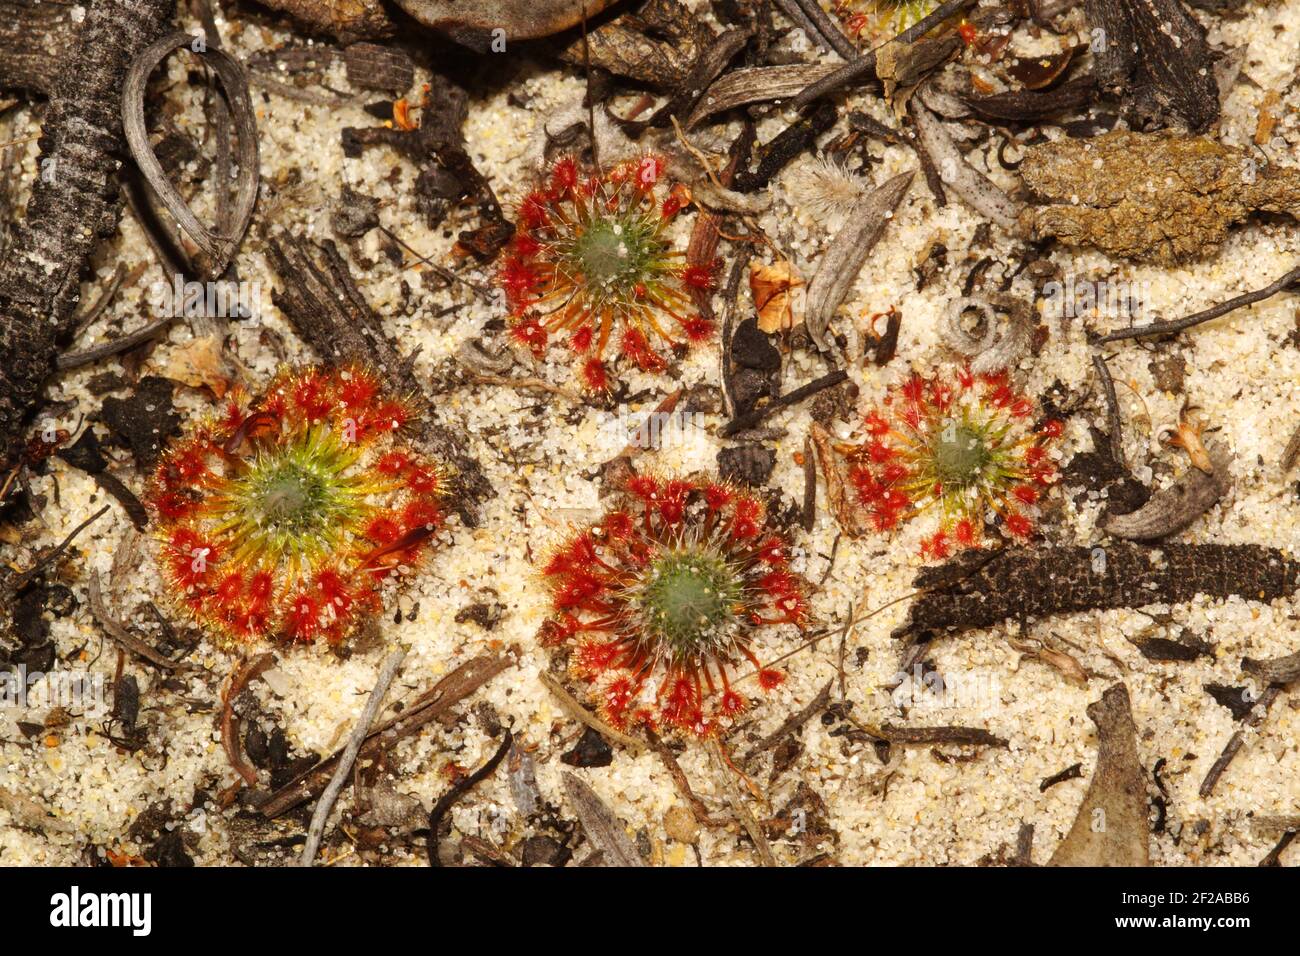 Drosera sargentii con foglie rosse appiccicose in sabbia bianca, habitat naturale nei pressi di Hopetoun, Australia occidentale Foto Stock